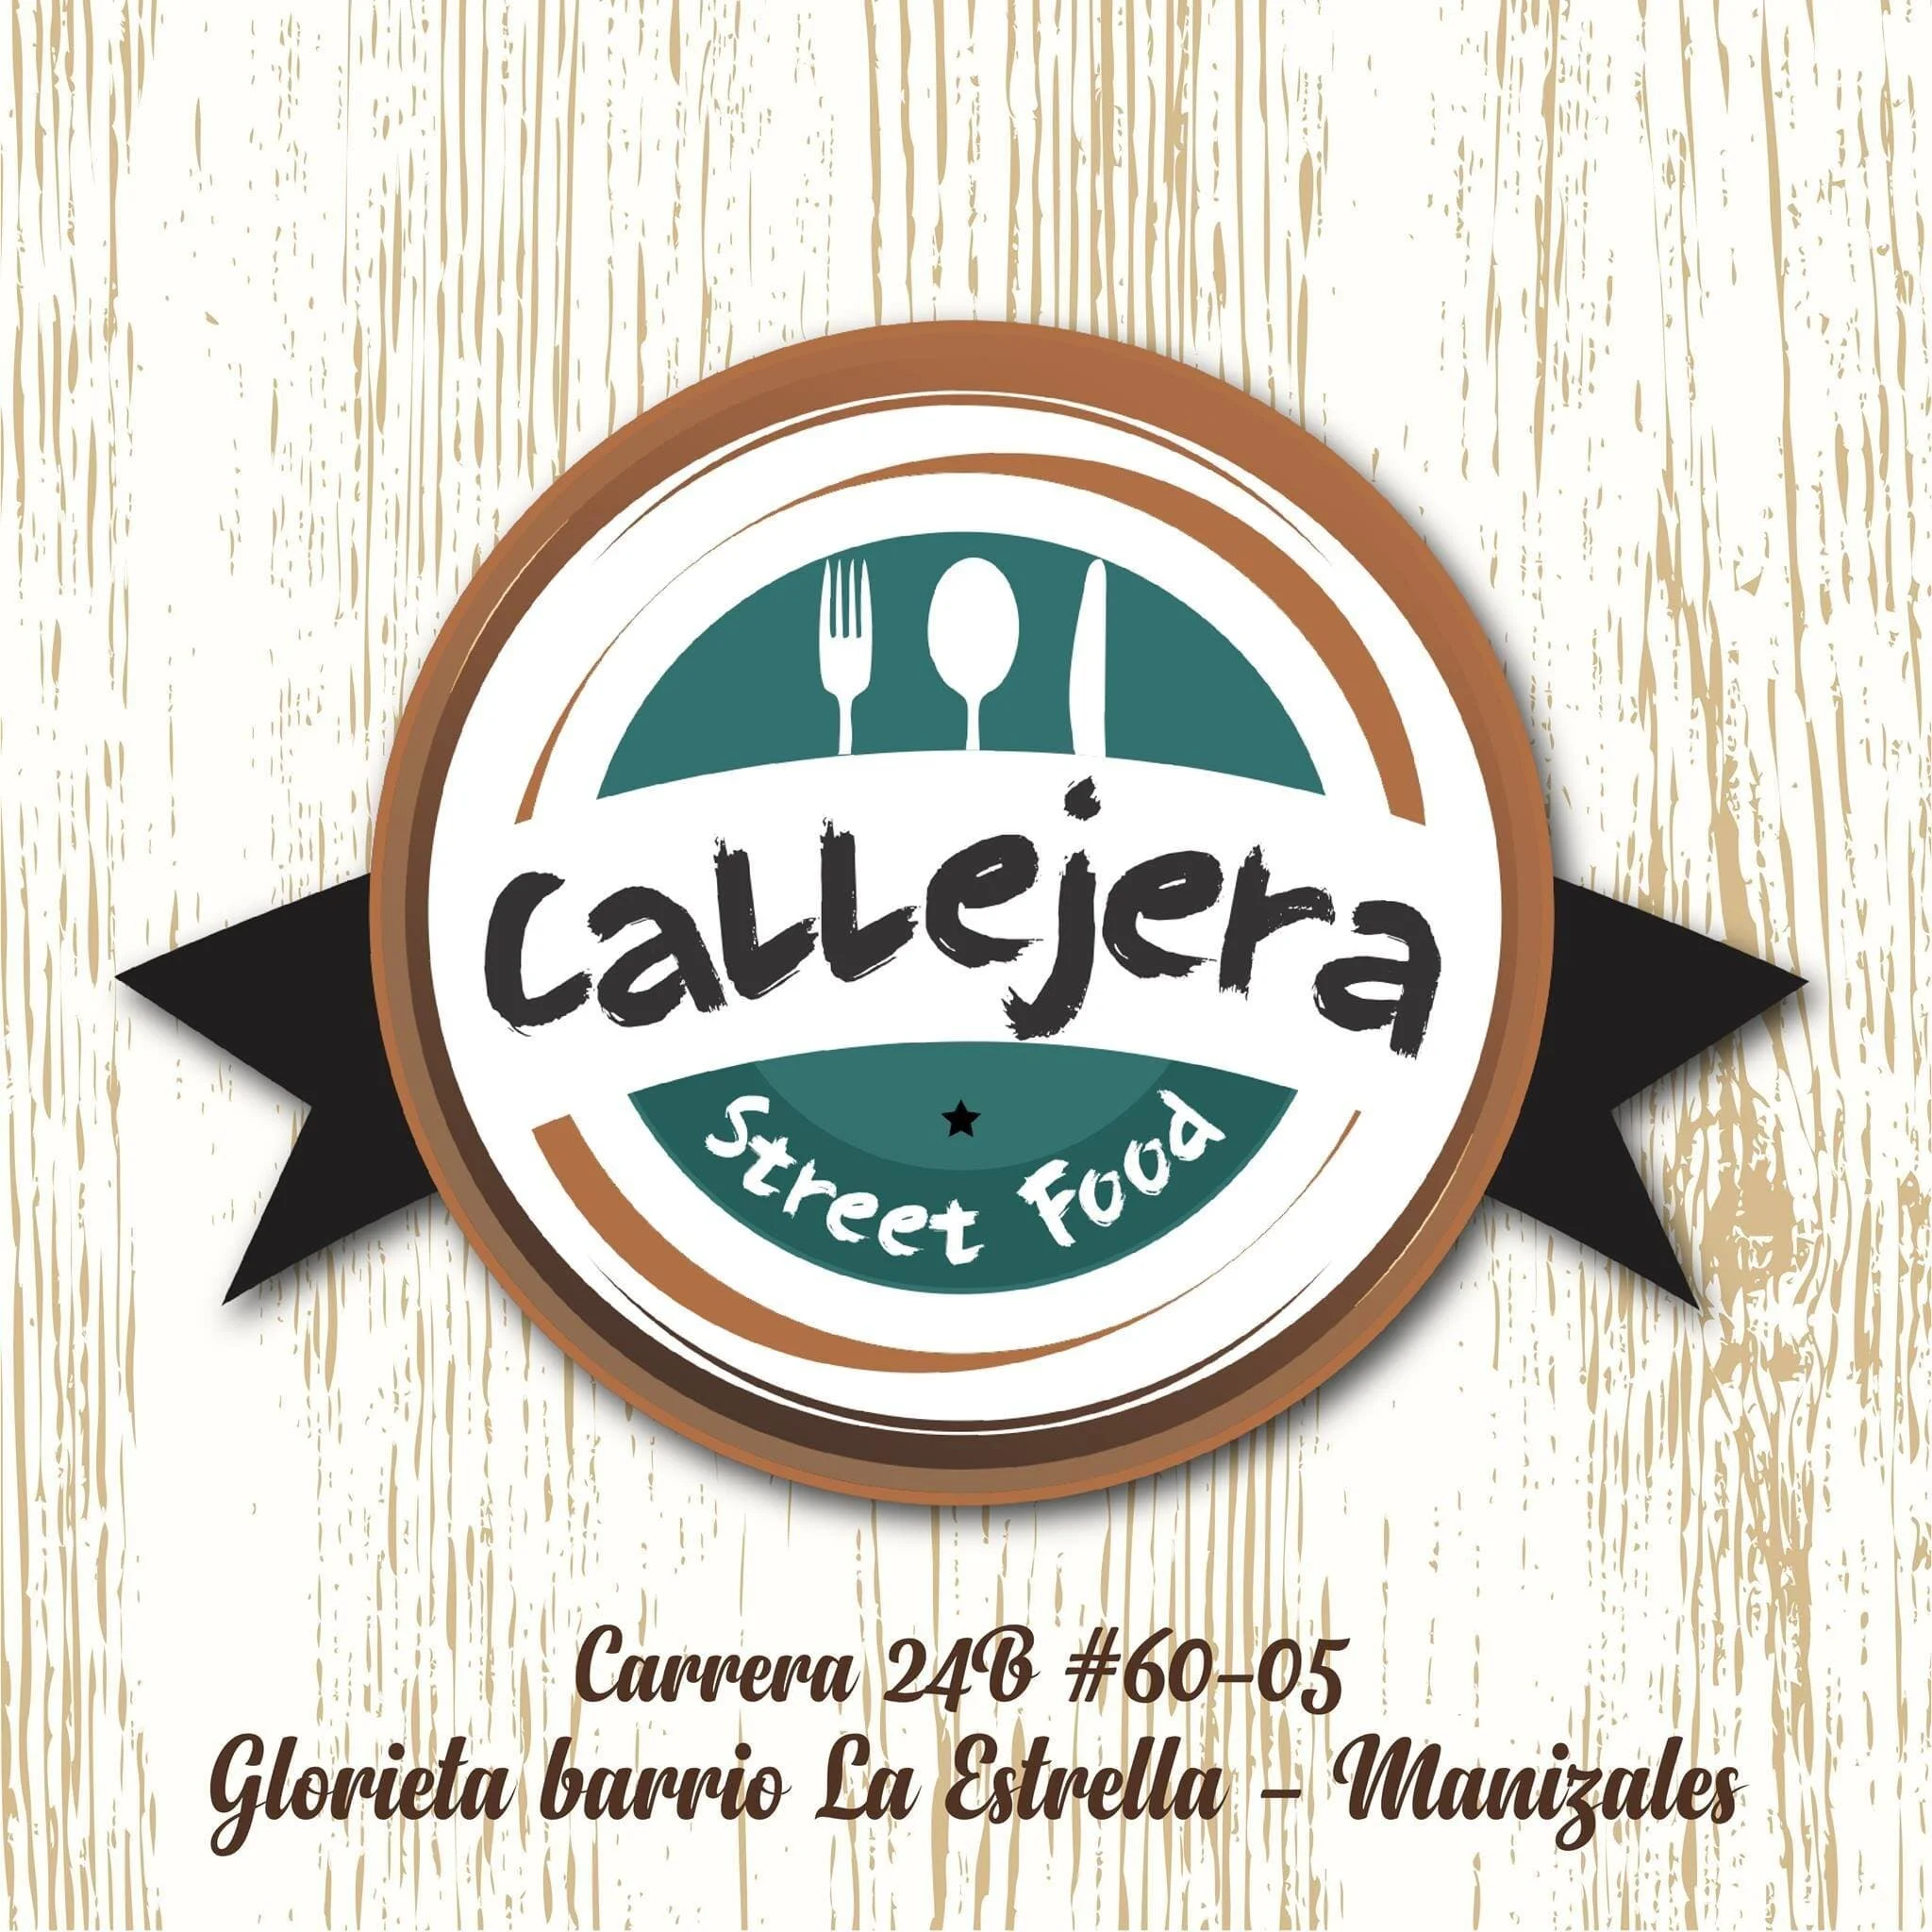 Callejera Street Food-6363